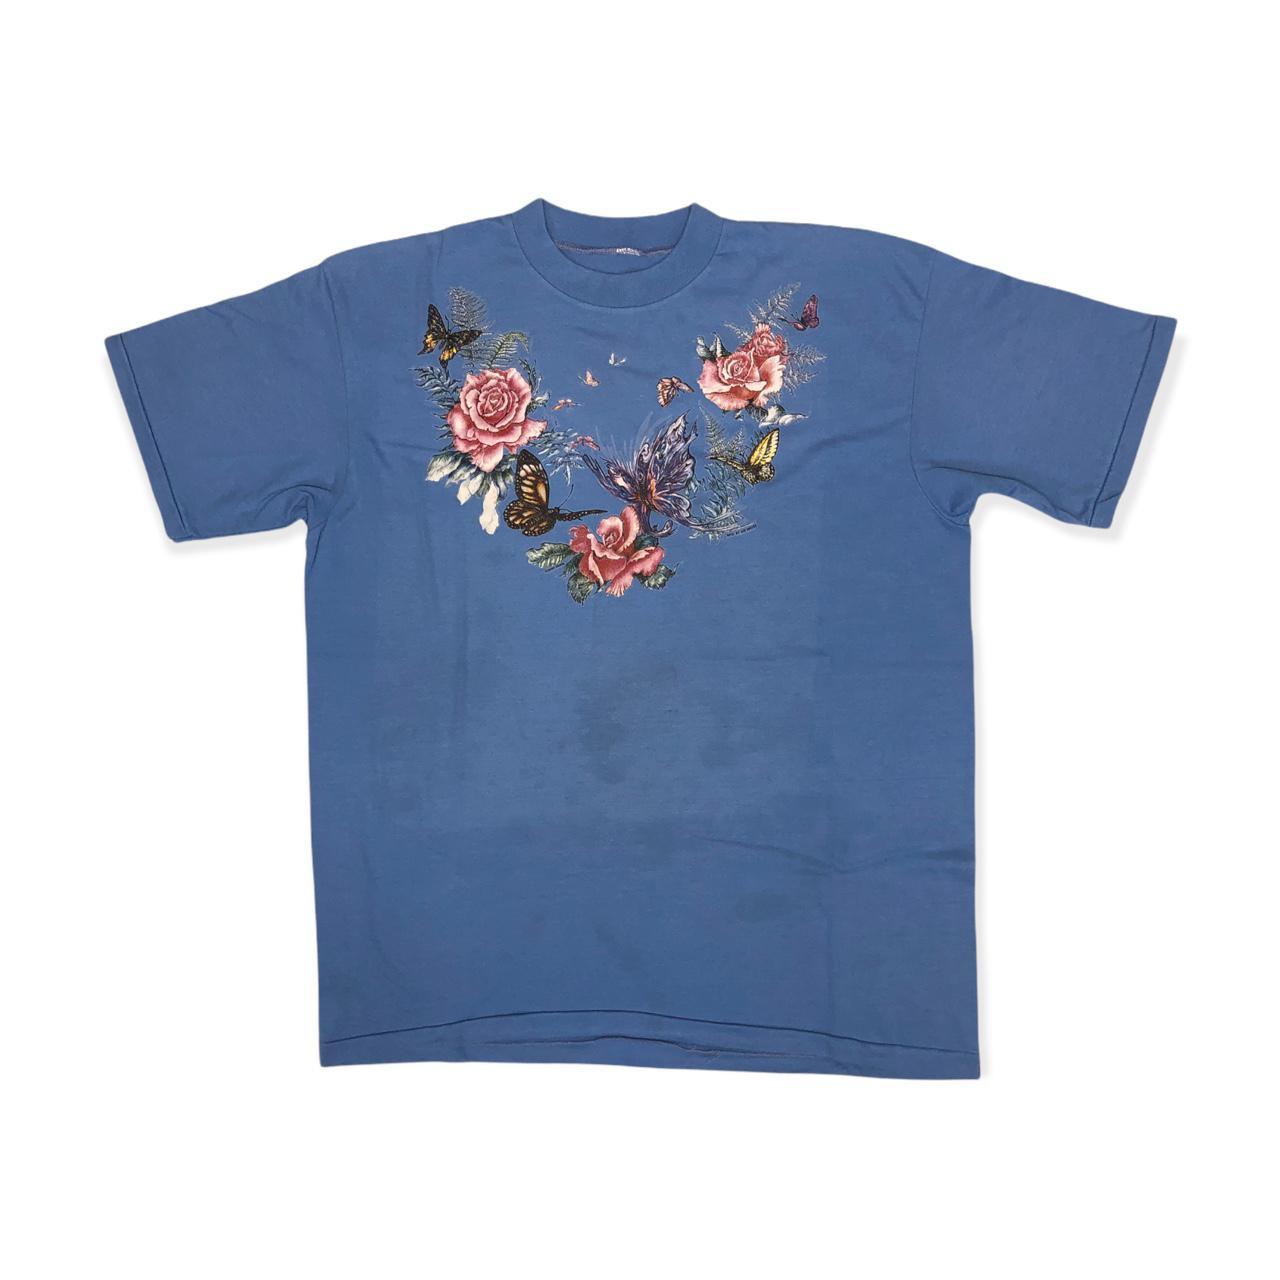 Product Image 1 - Vintage single stitch t-shirt

Fits a